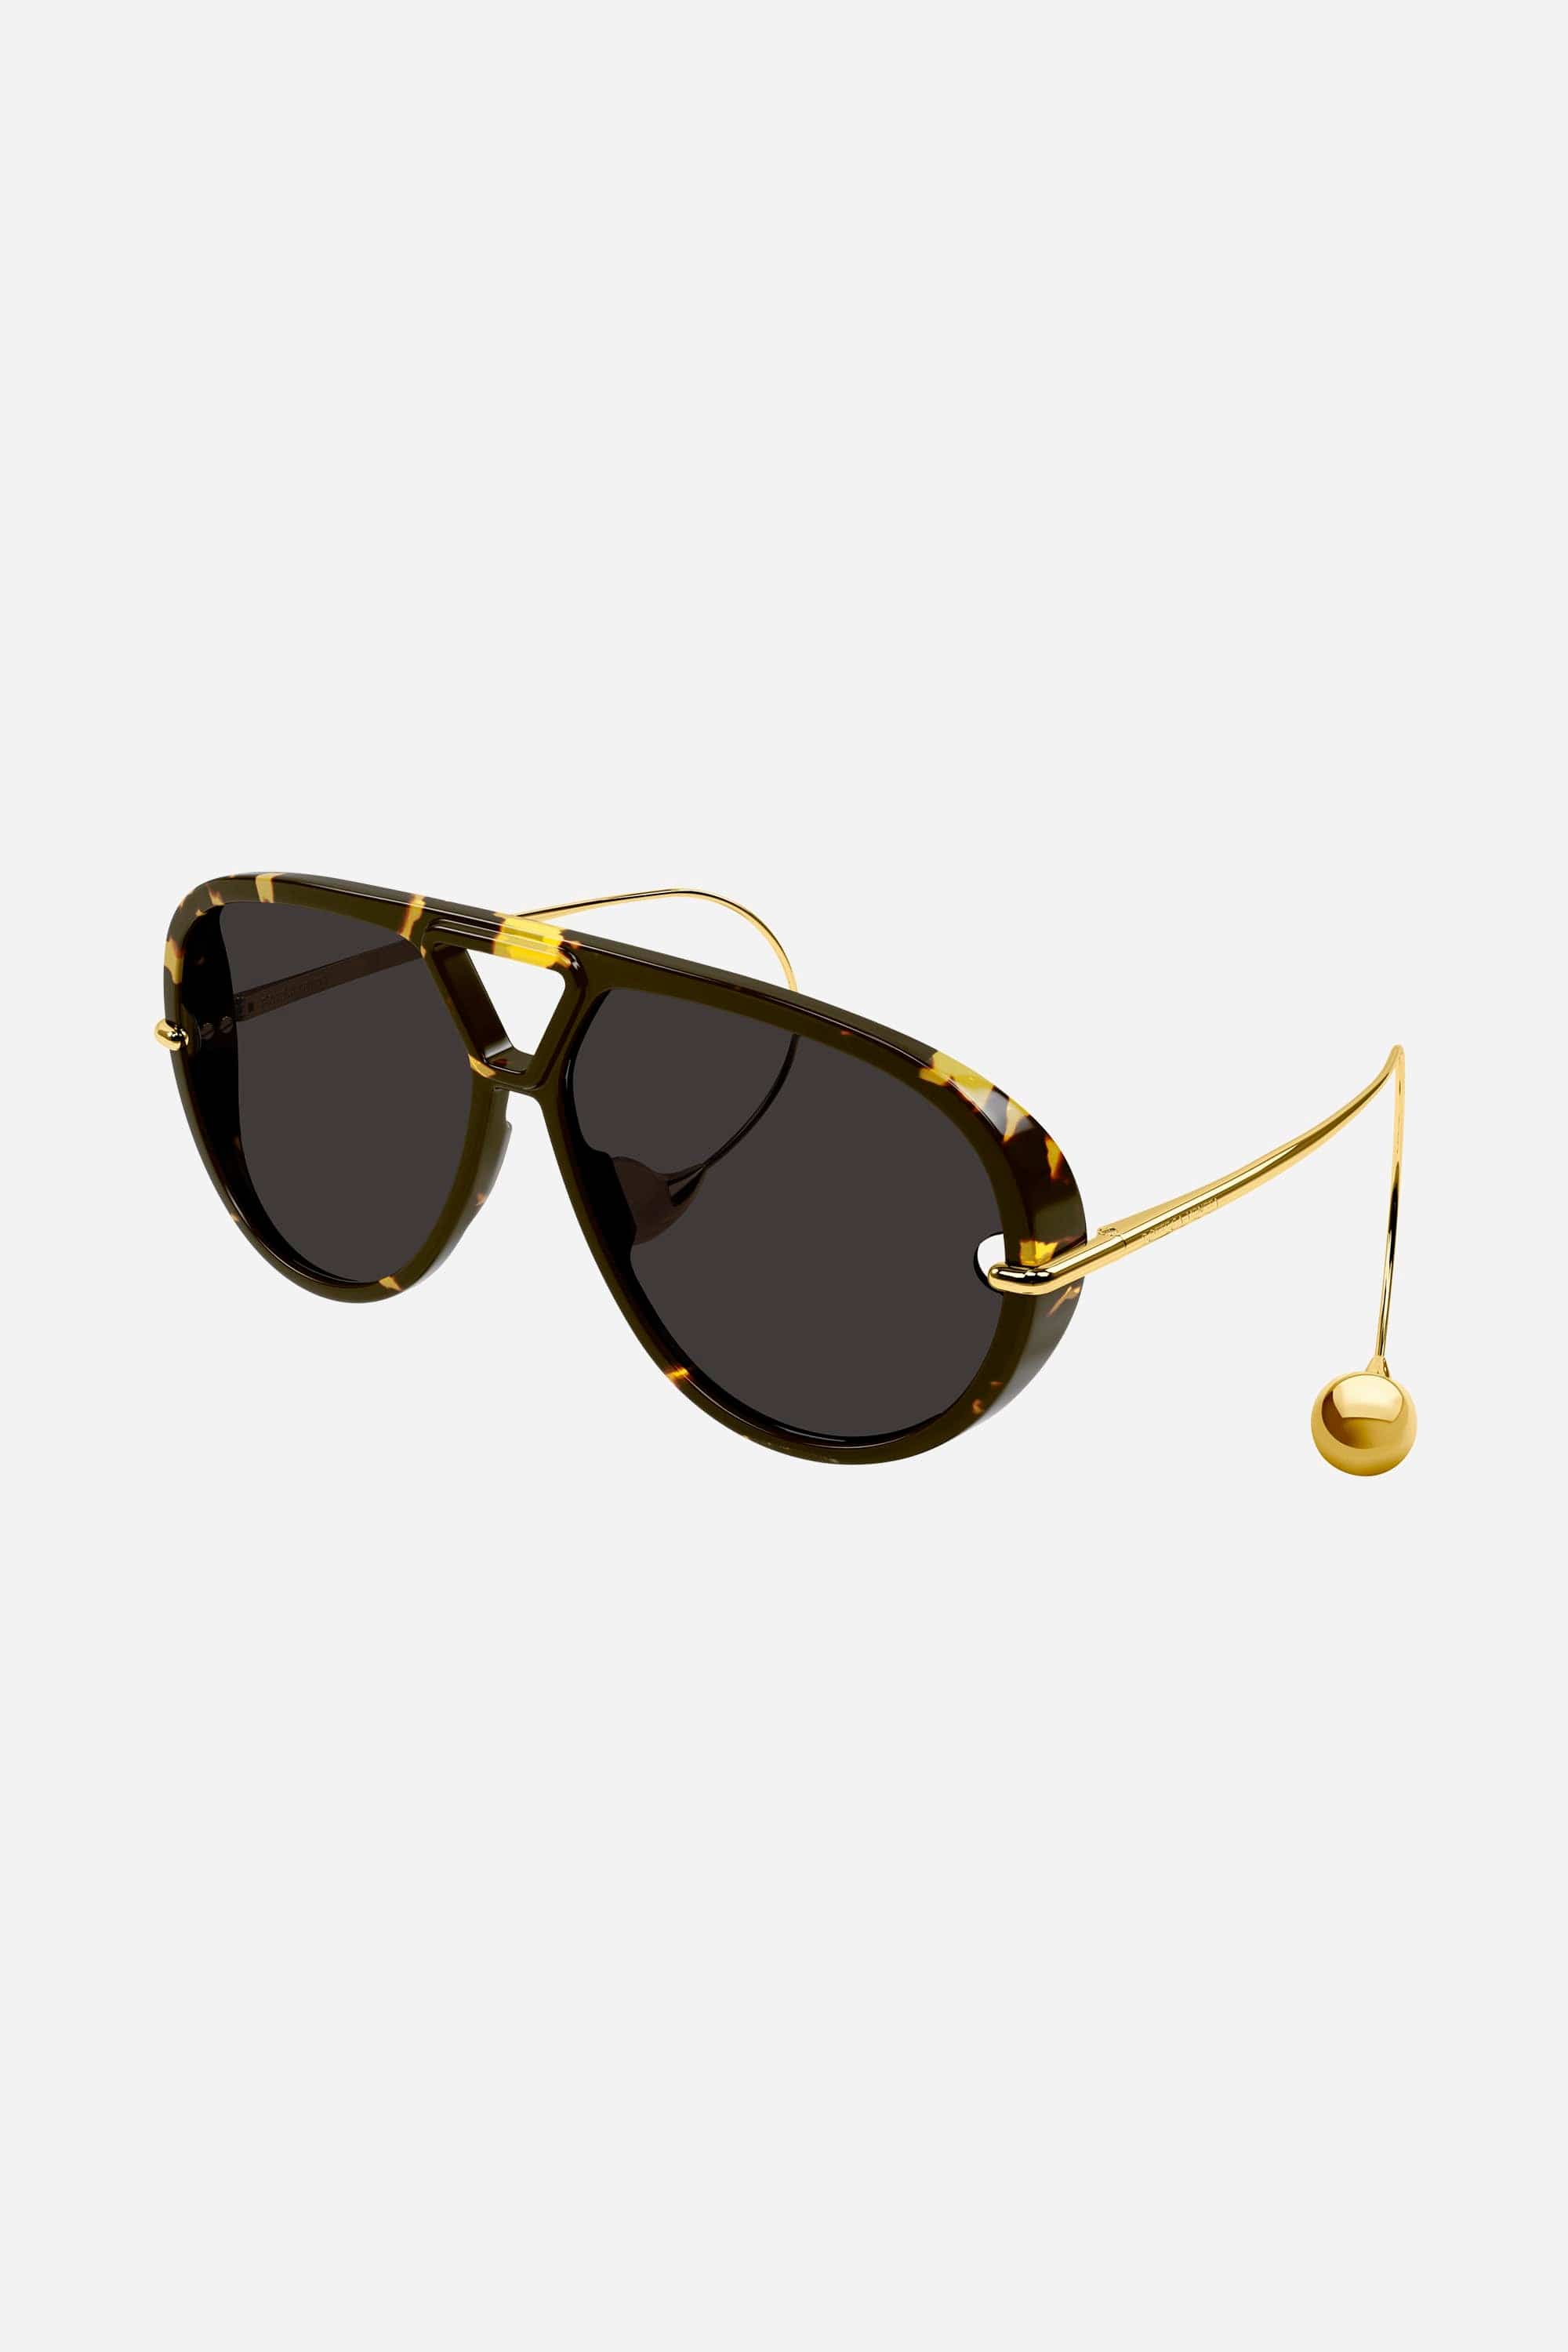 Bottega Veneta pilot sunglasses - Eyewear Club